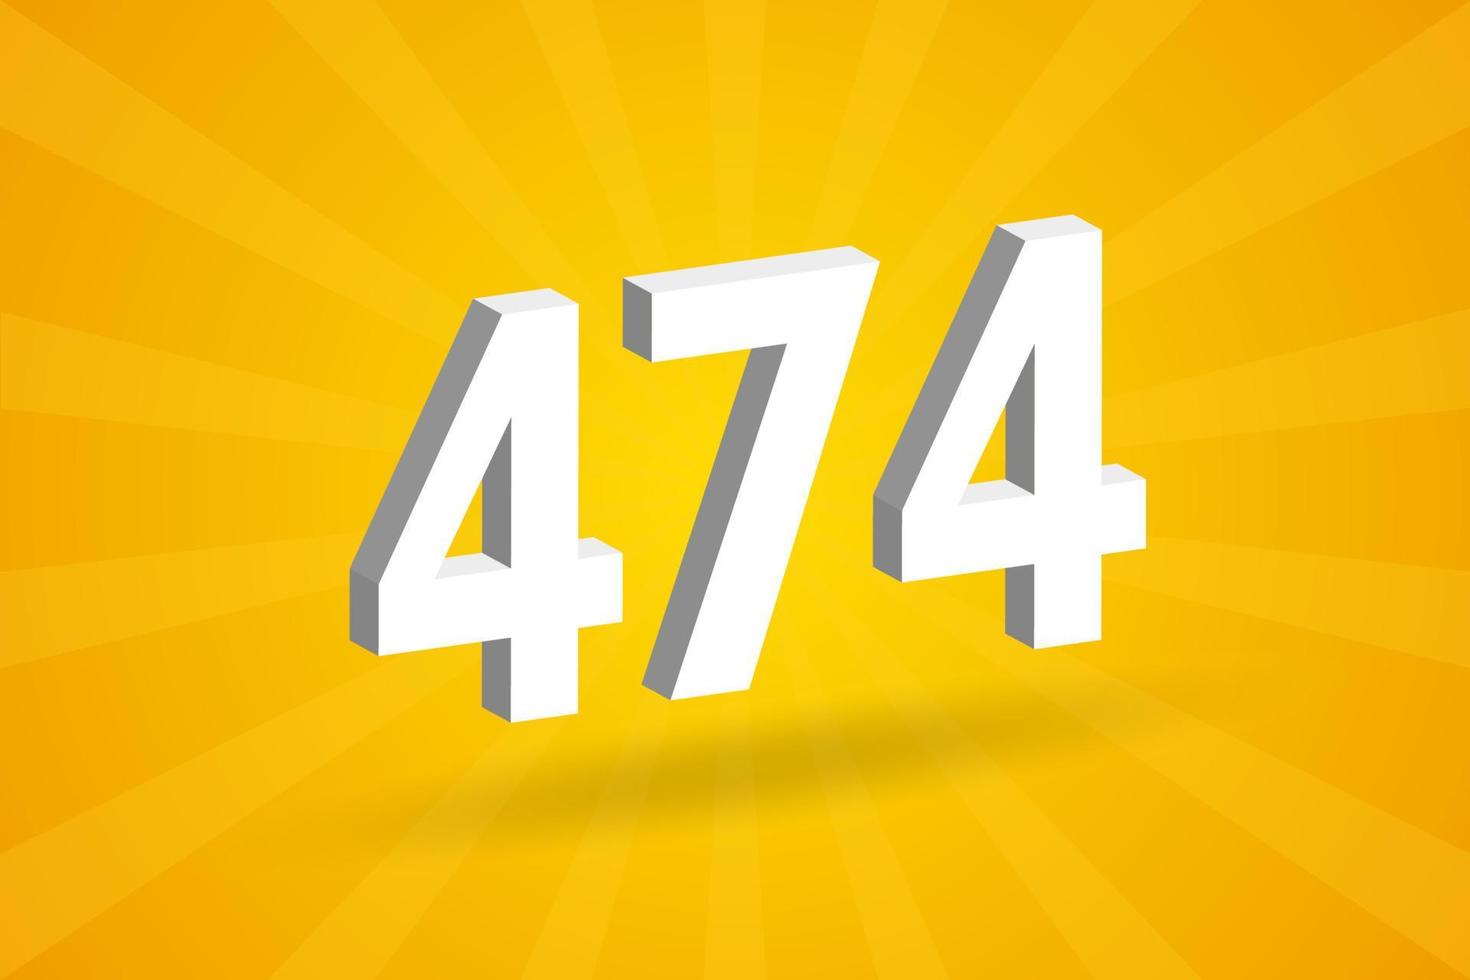 3d 474 siffra font alfabet. vit 3d siffra 474 med gul bakgrund vektor